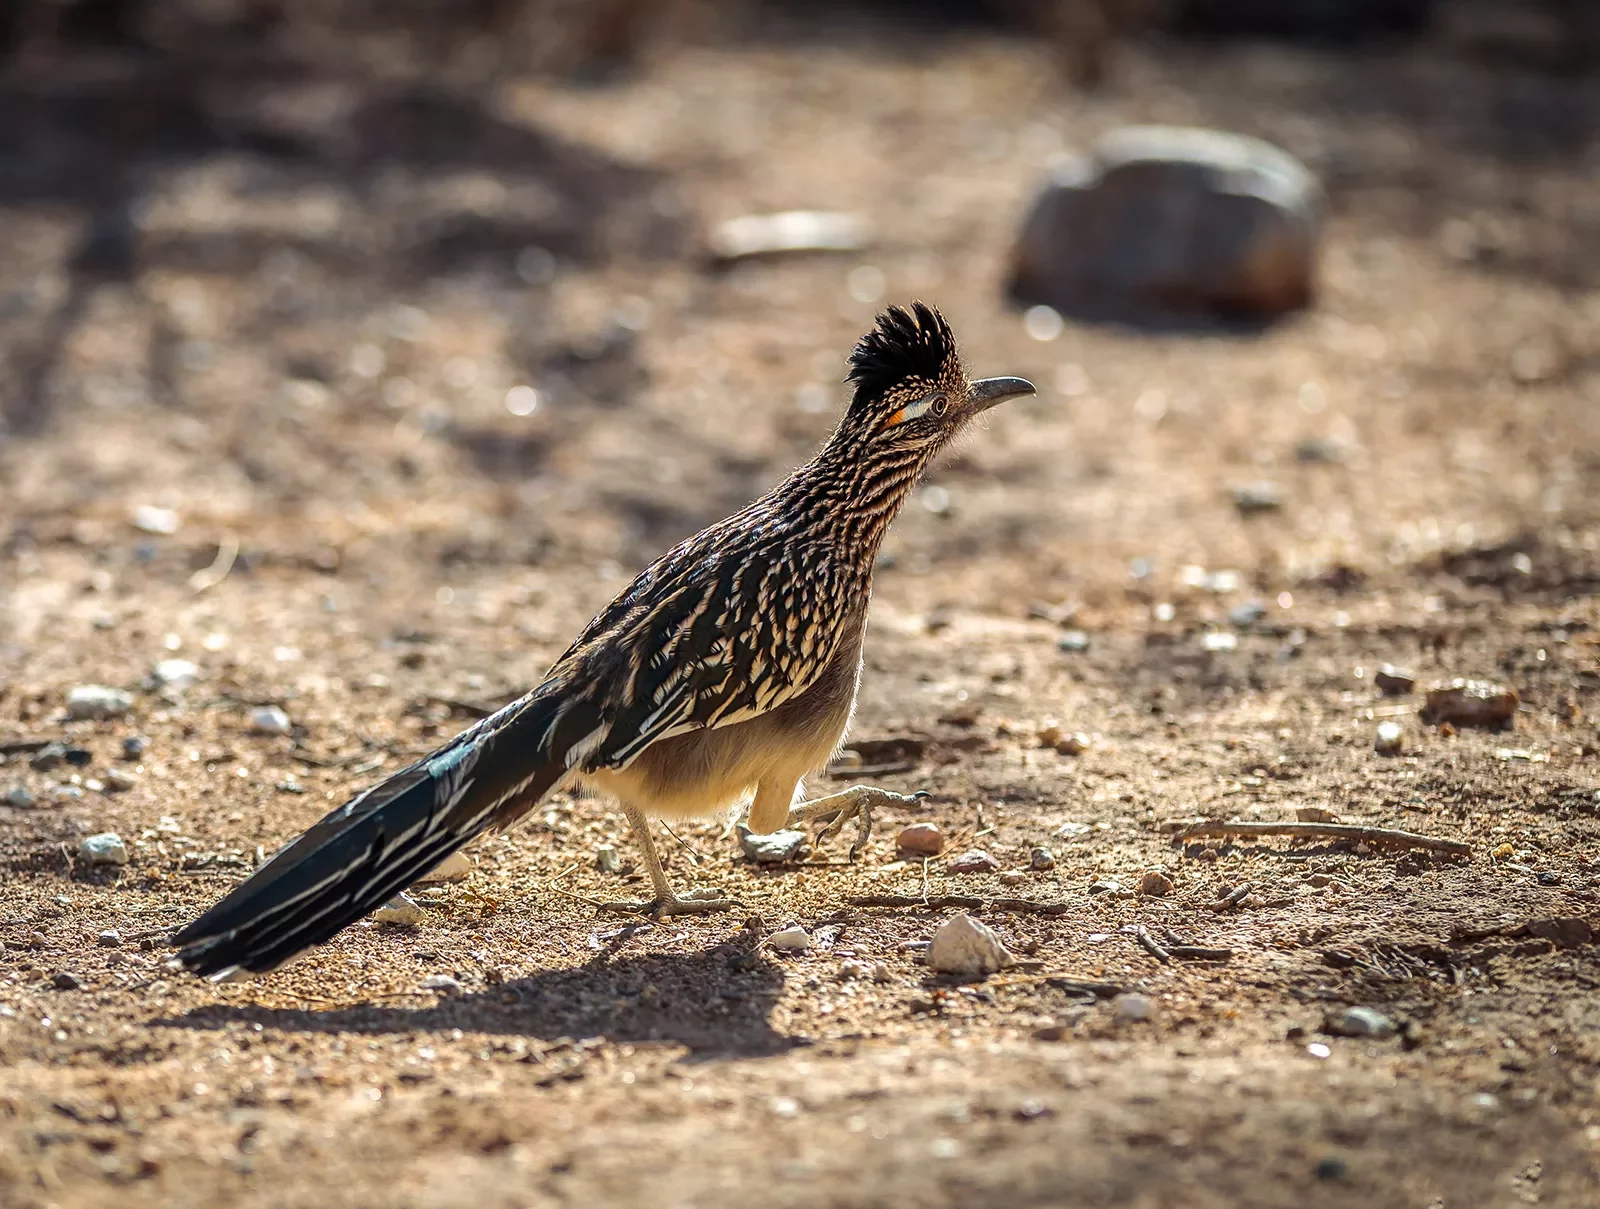 up-close of bird in Arizona